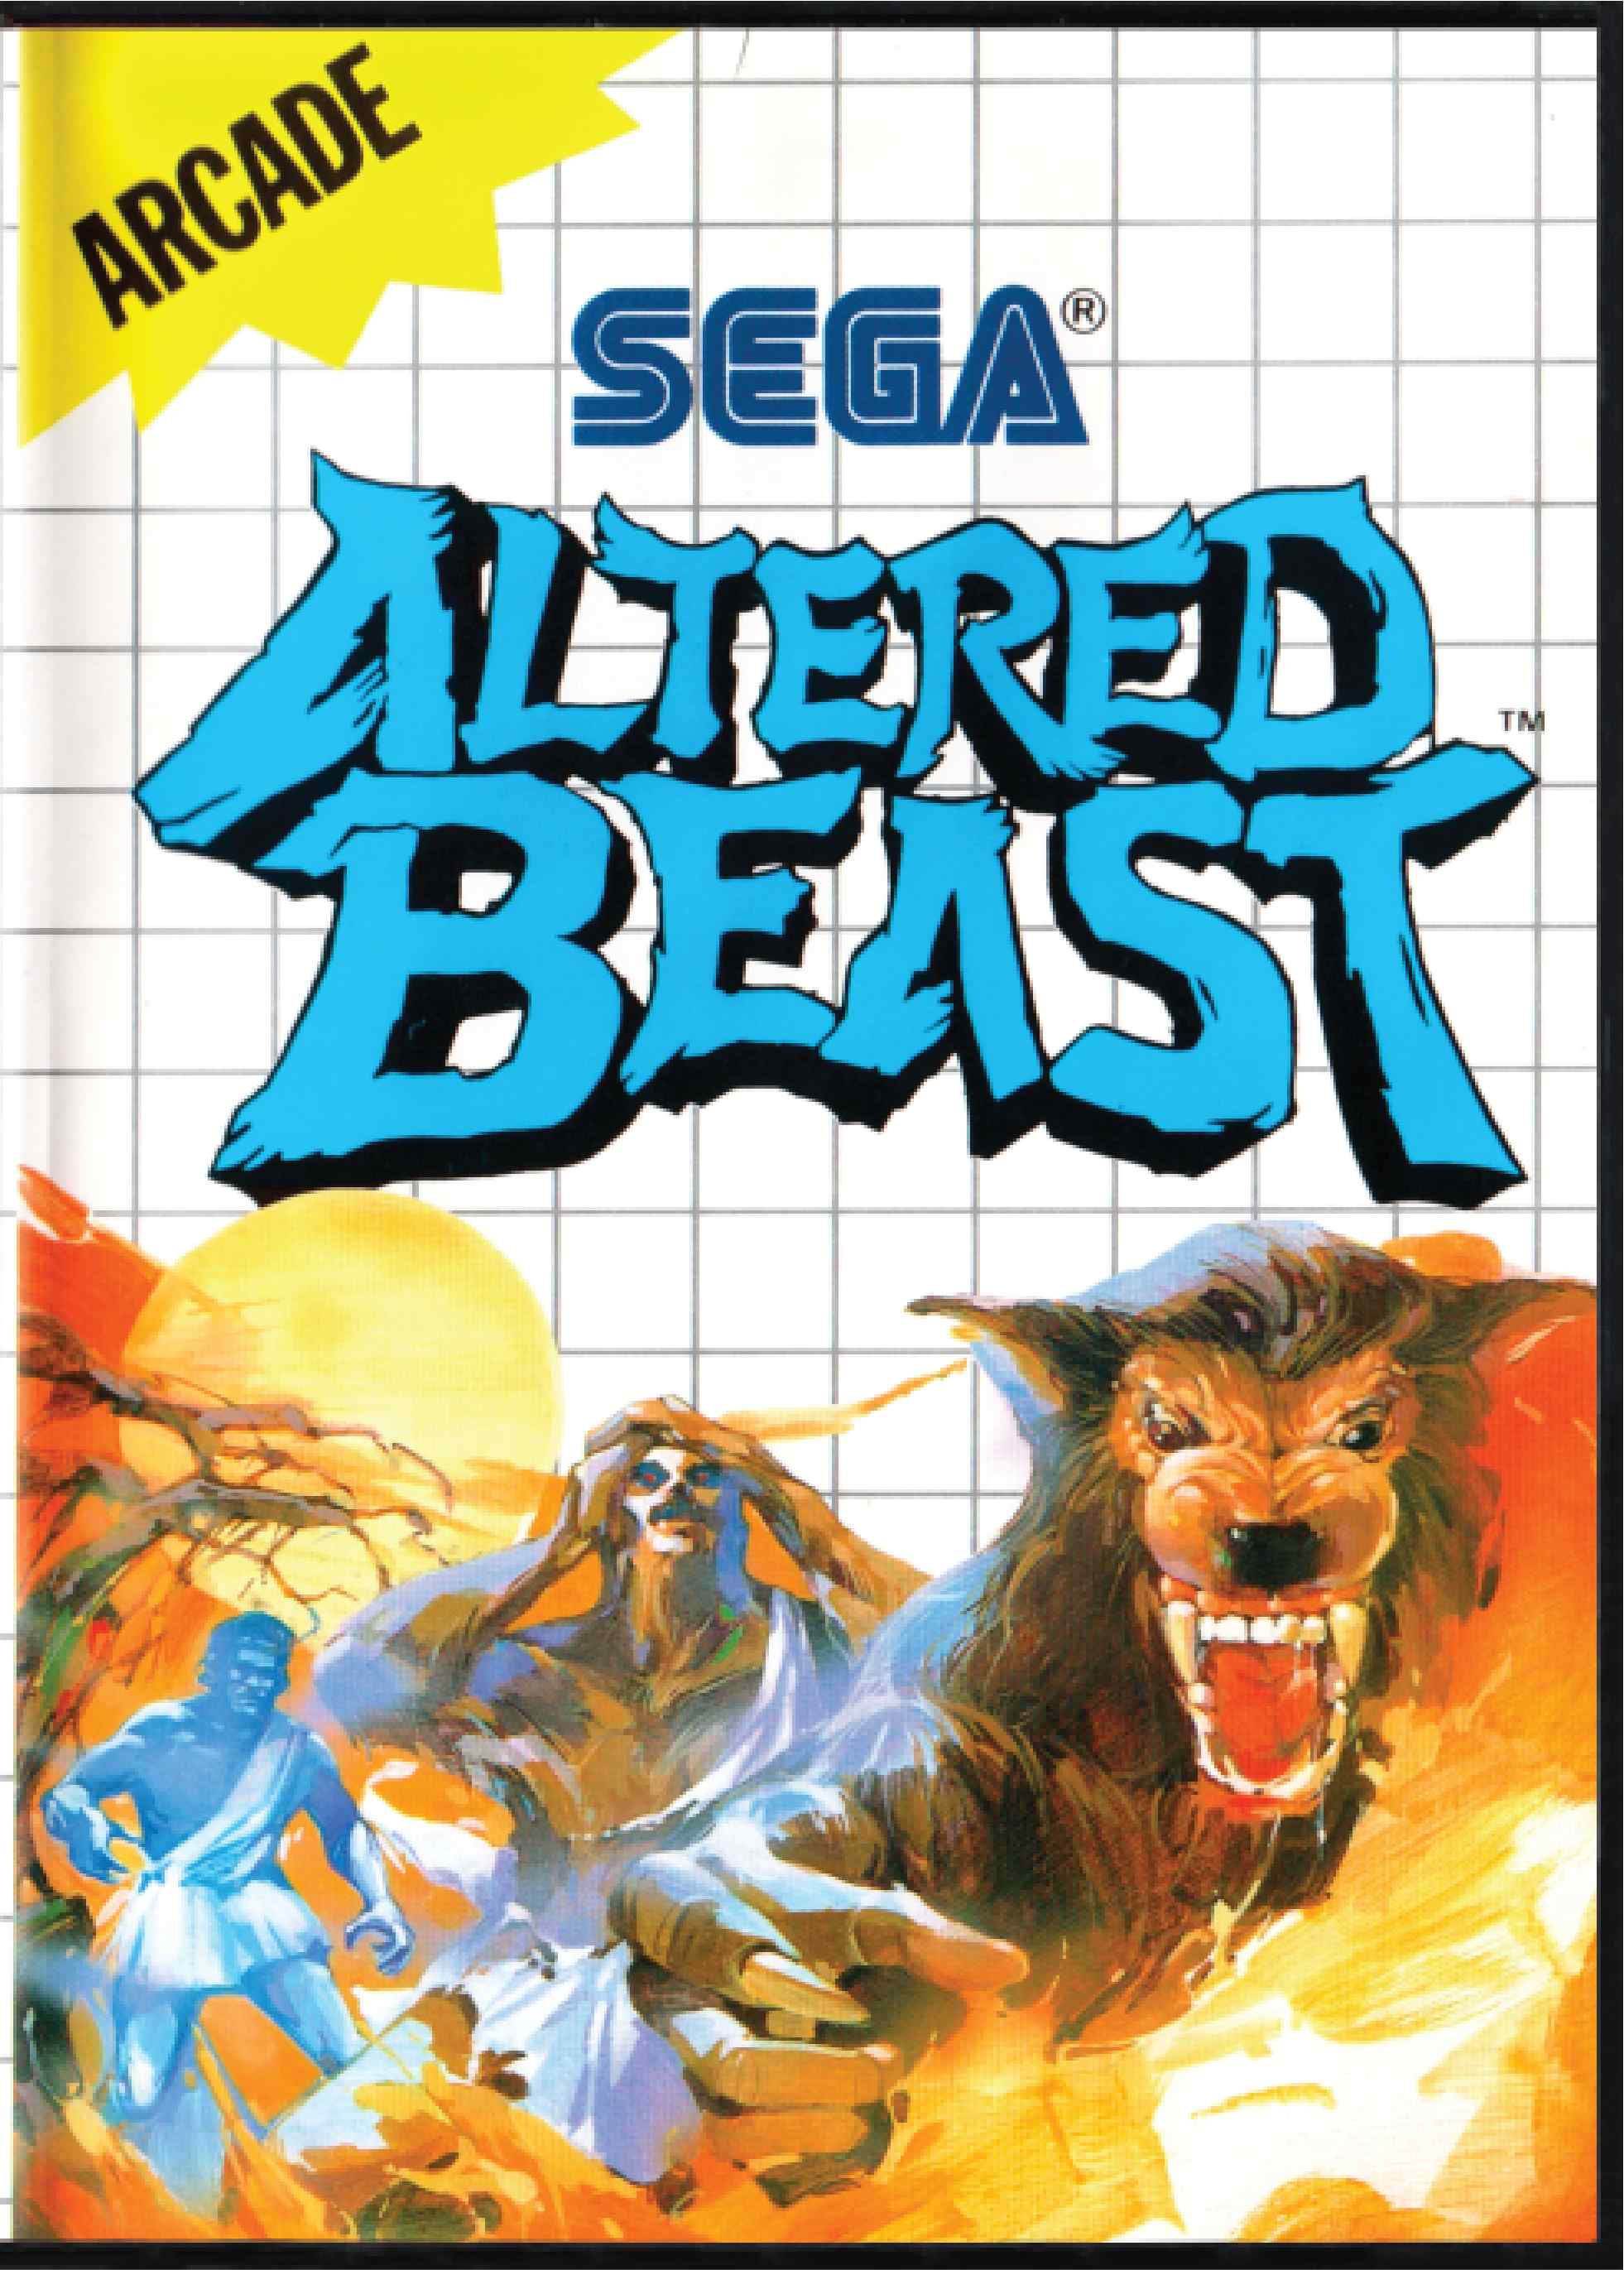 Altered Beast Cover Art